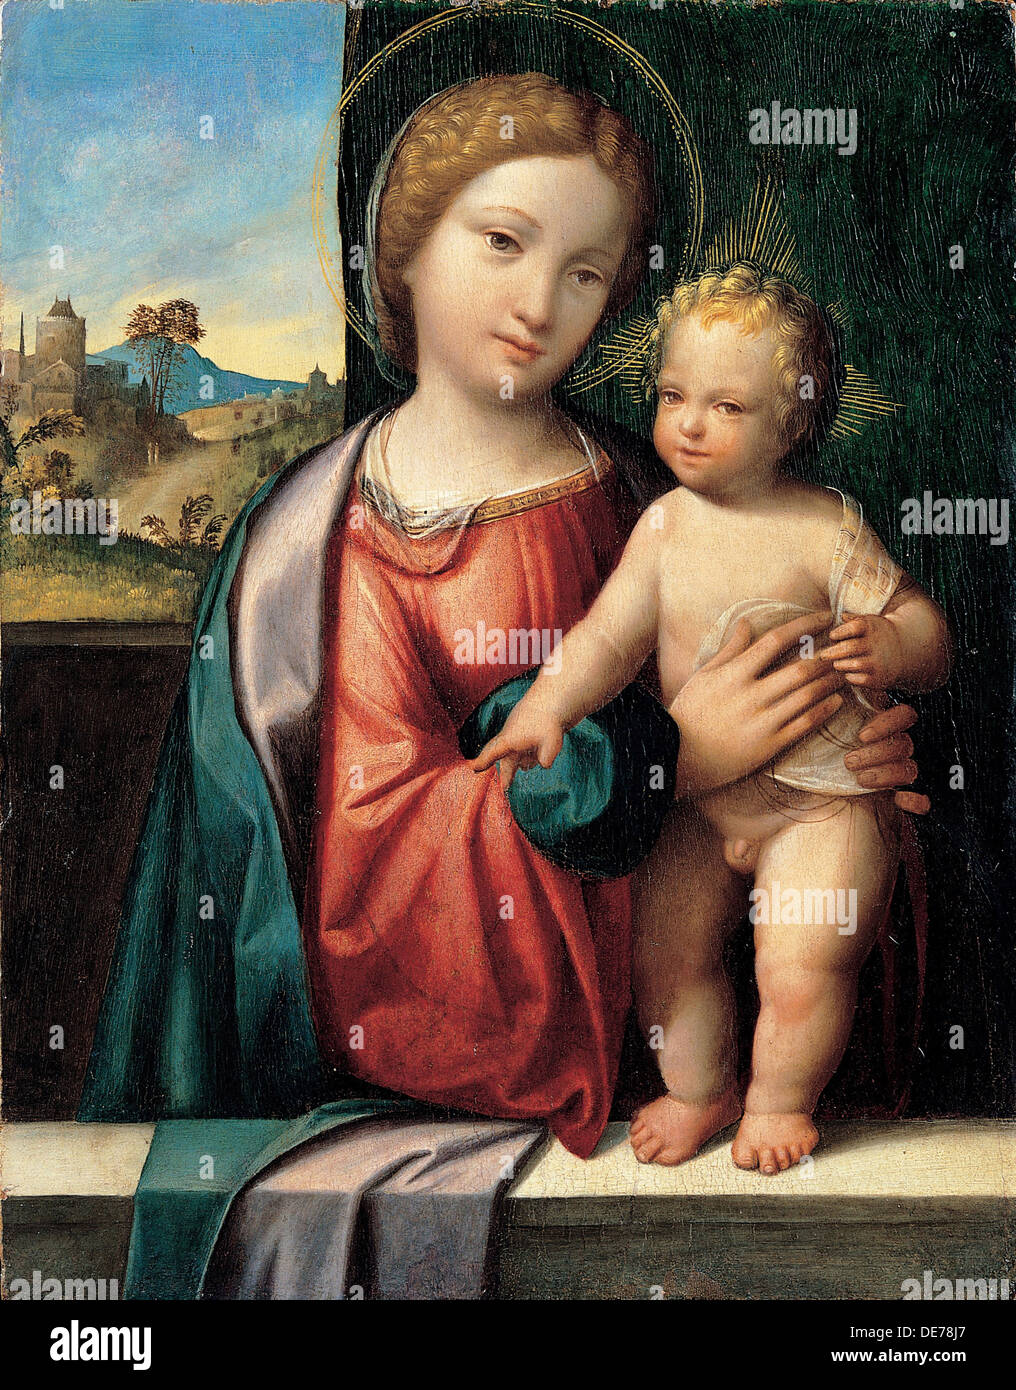 Madonna con il Bambino, 1512. Artista: Garofalo, Benvenuto Tisi da (1481-1559) Foto Stock